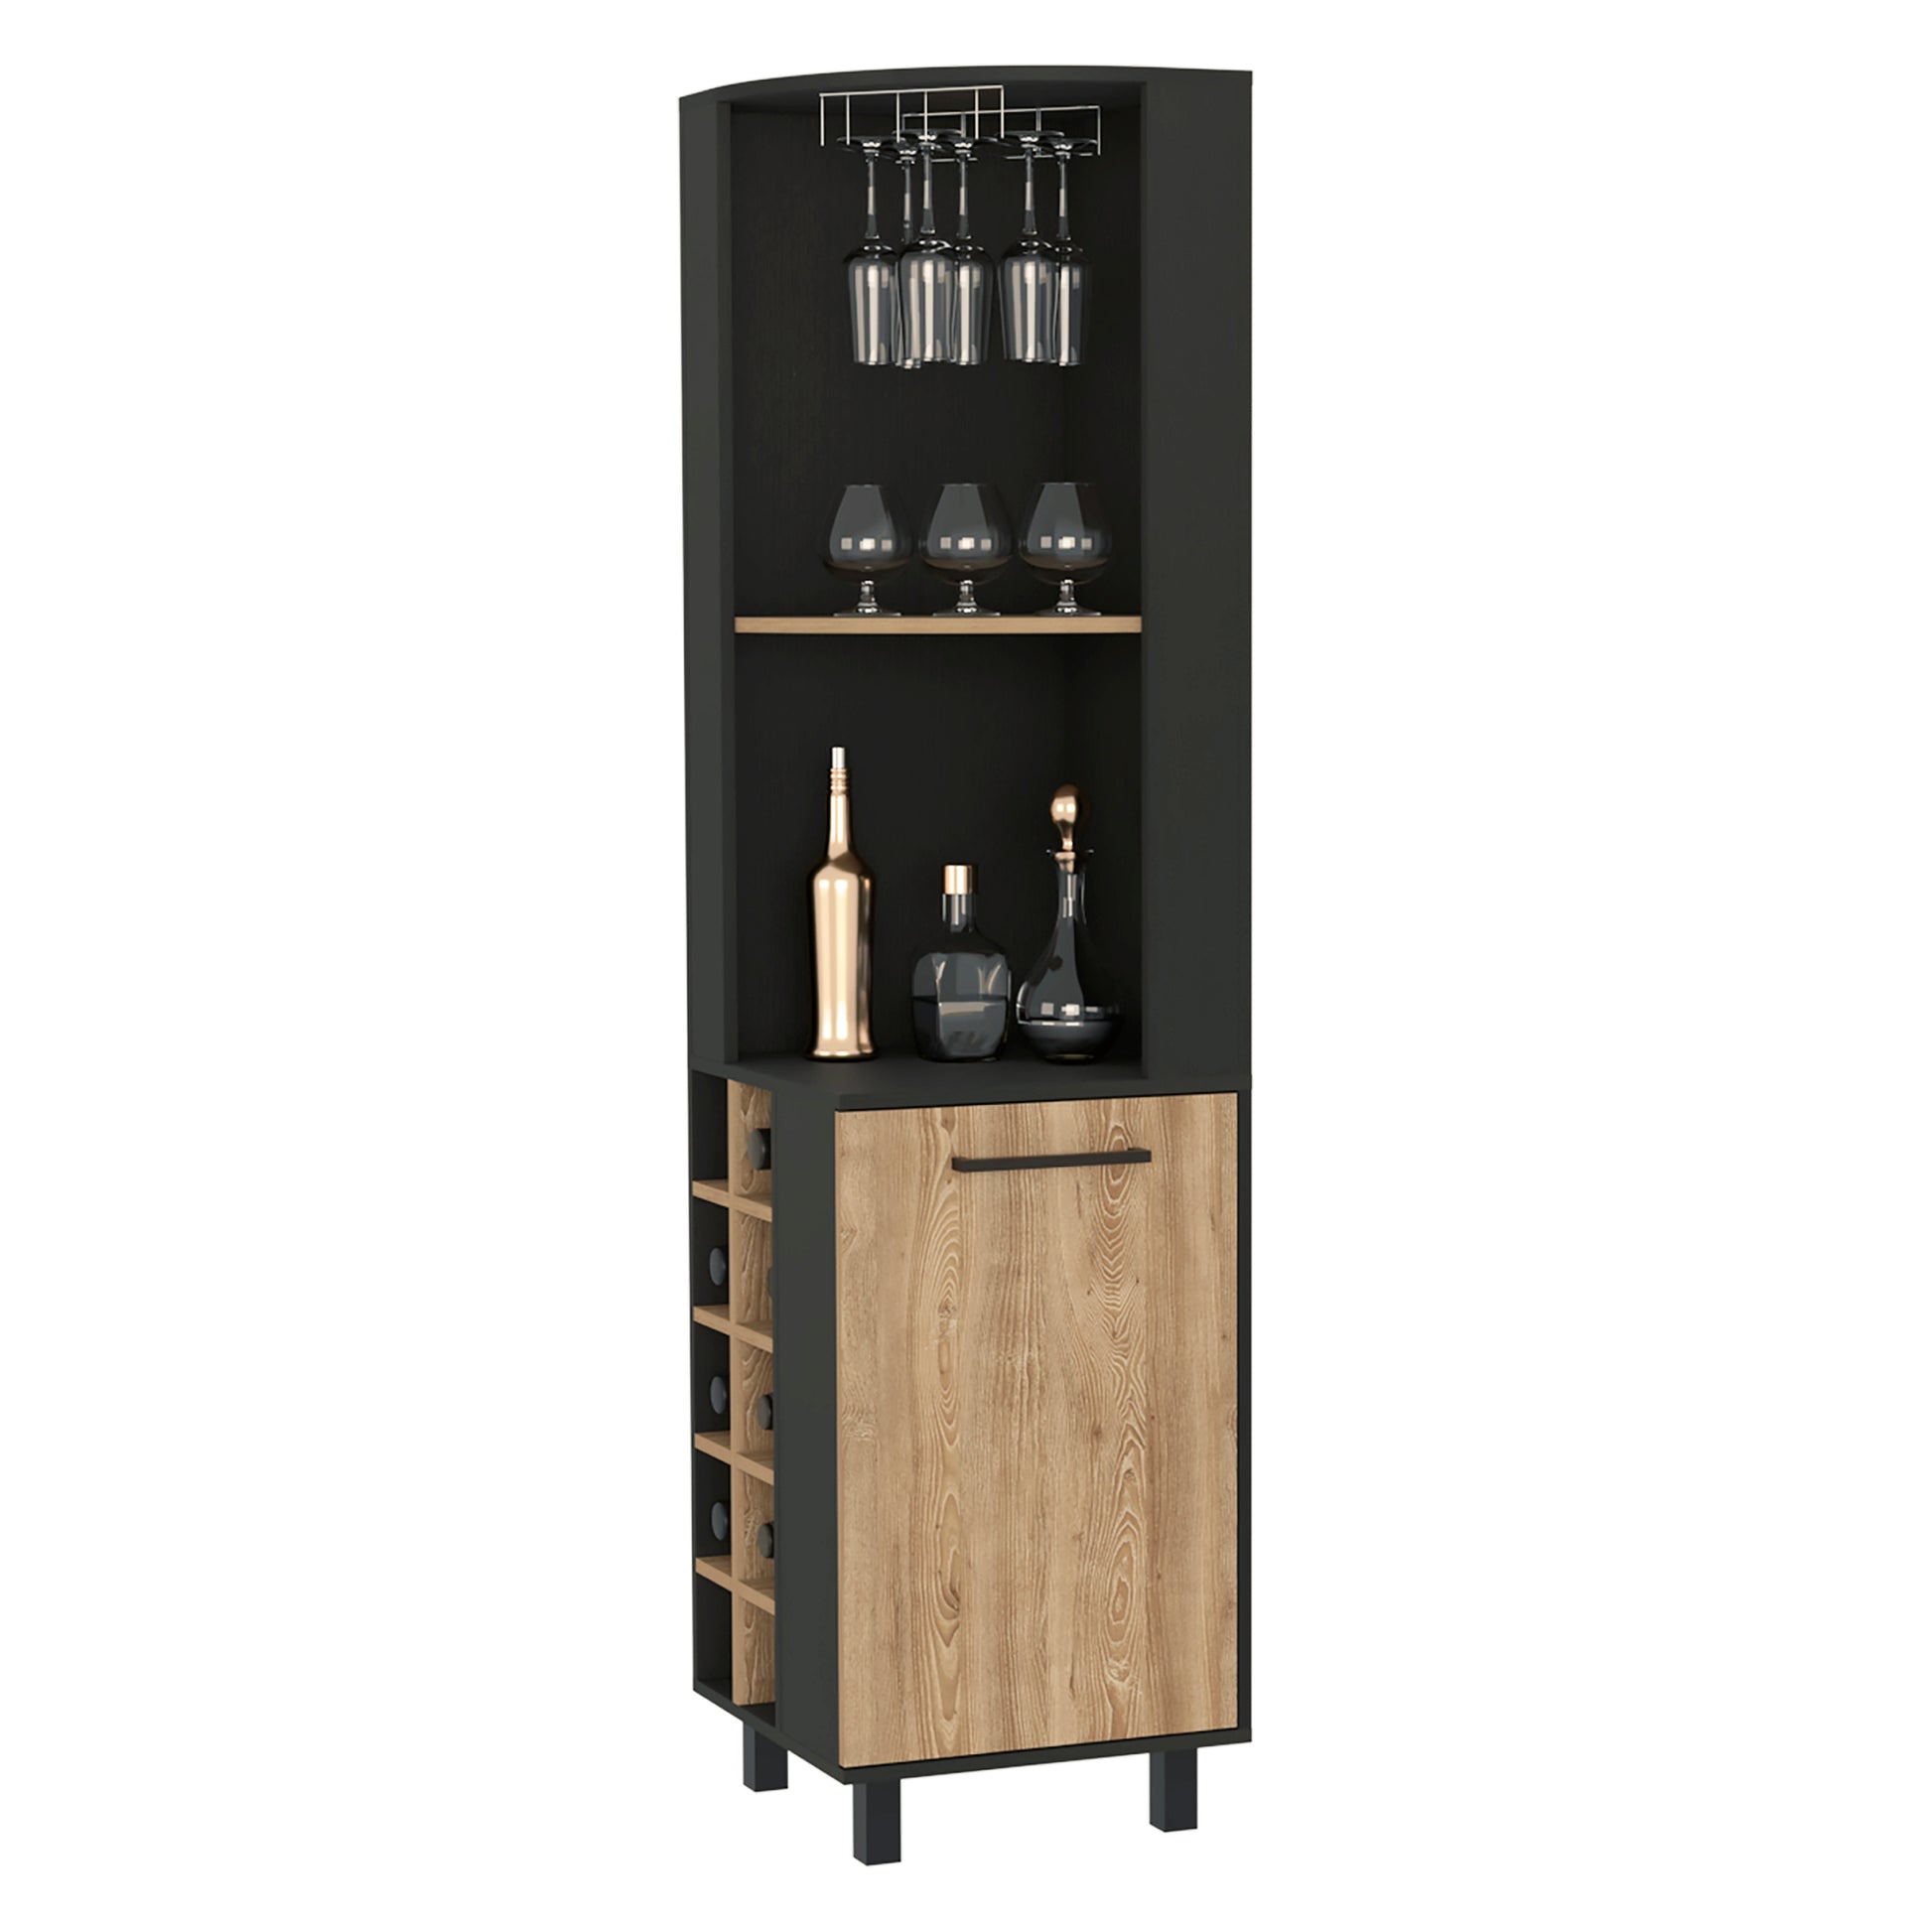 Leah Corner Bar Cabinet - 5 Or More Spaces